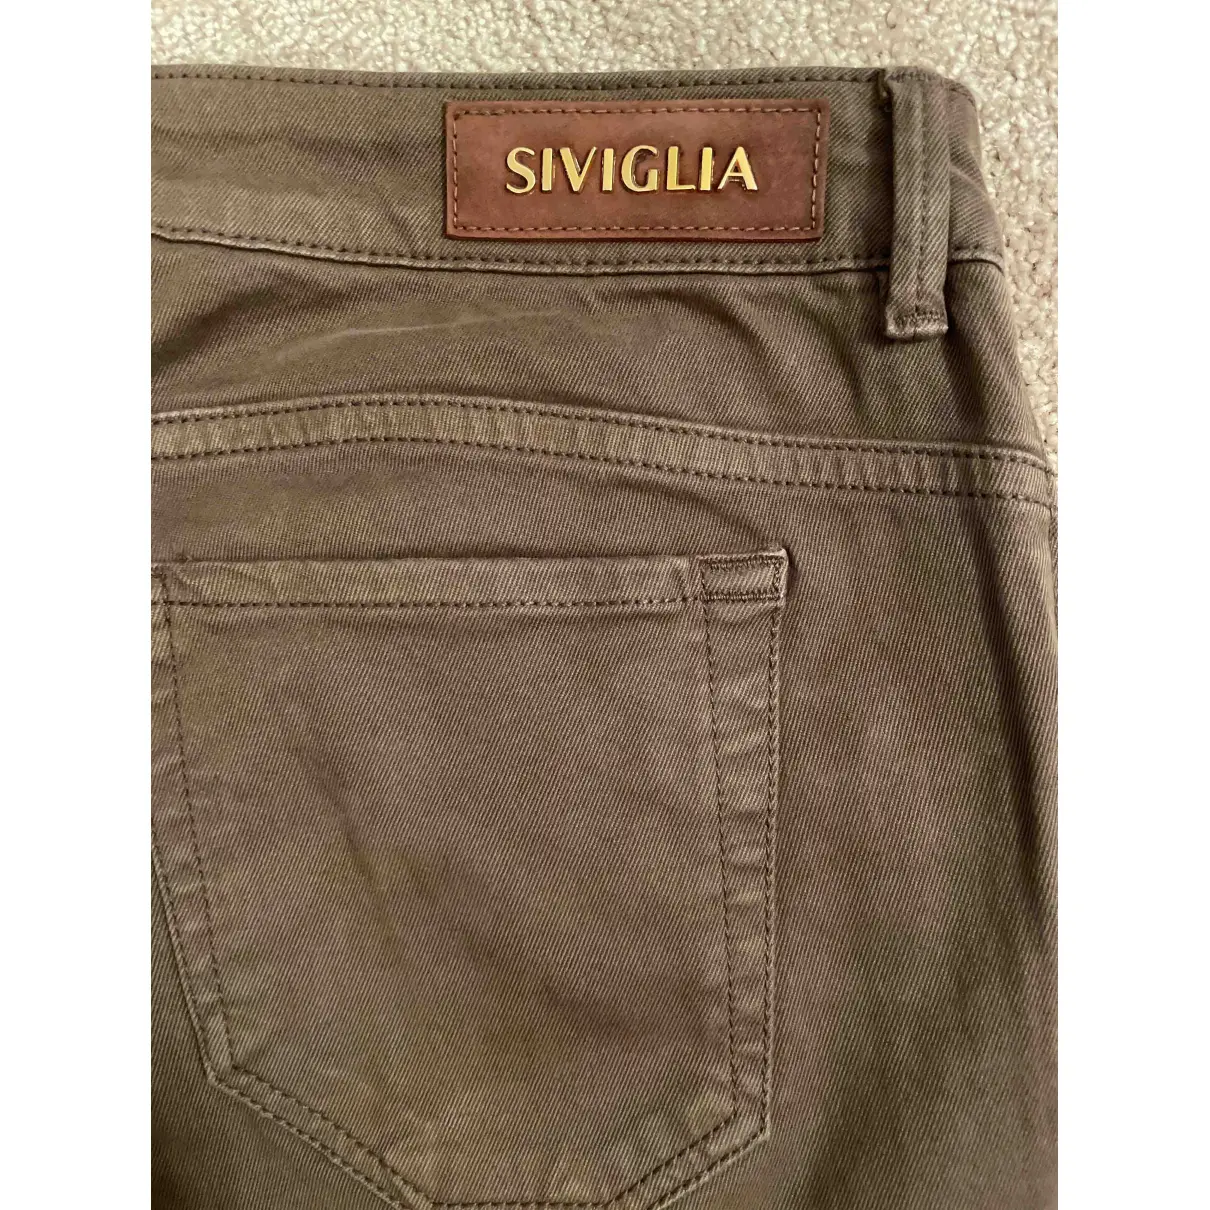 Slim jeans Atelier Siviglia